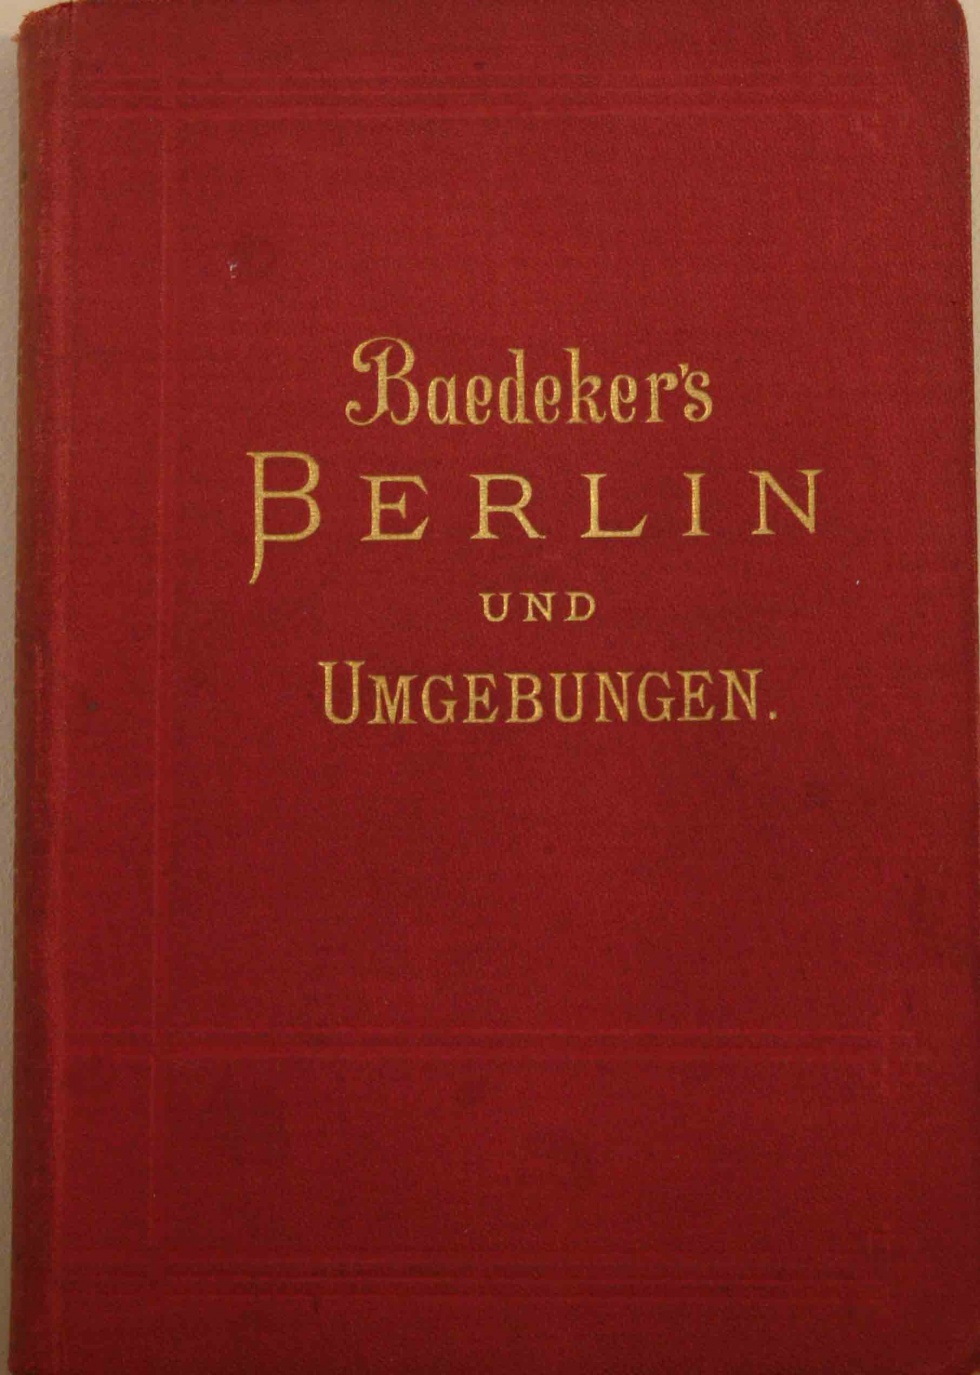 Baedecker’s Berlin und Umgebungen, 1900 (Kurt Tucholsky Literaturmuseum CC BY-NC-SA)